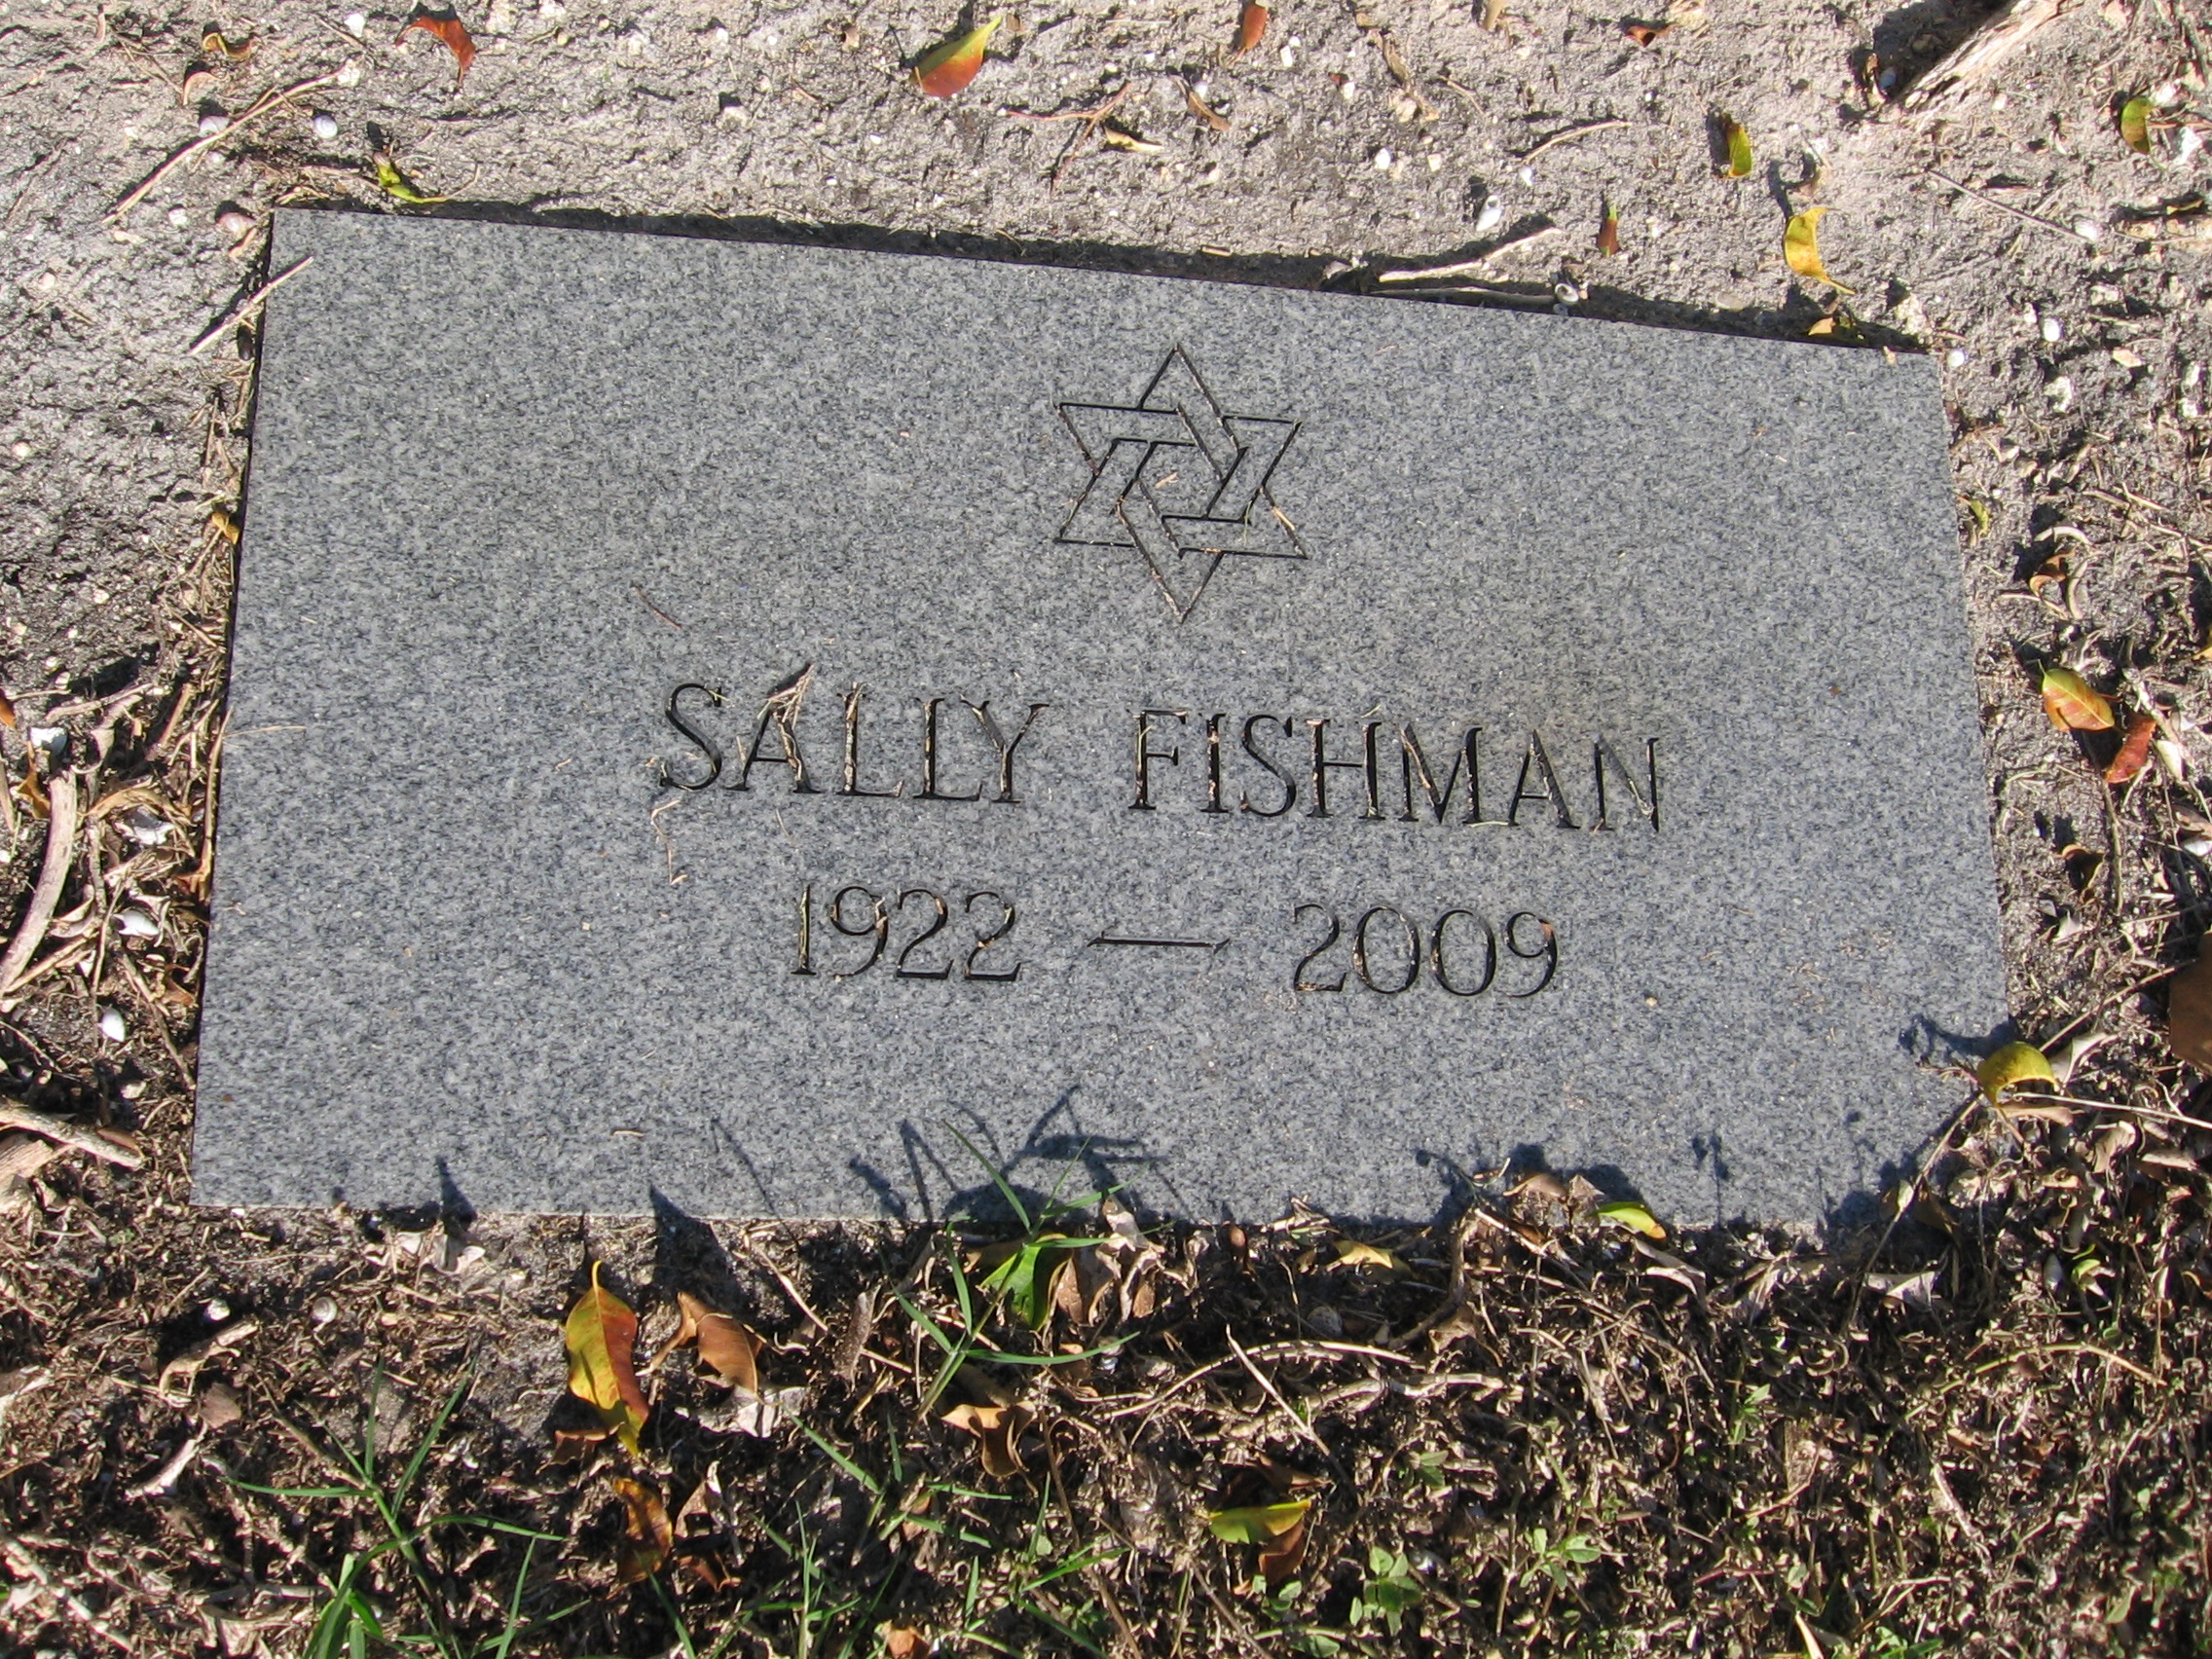 Sally Fishman